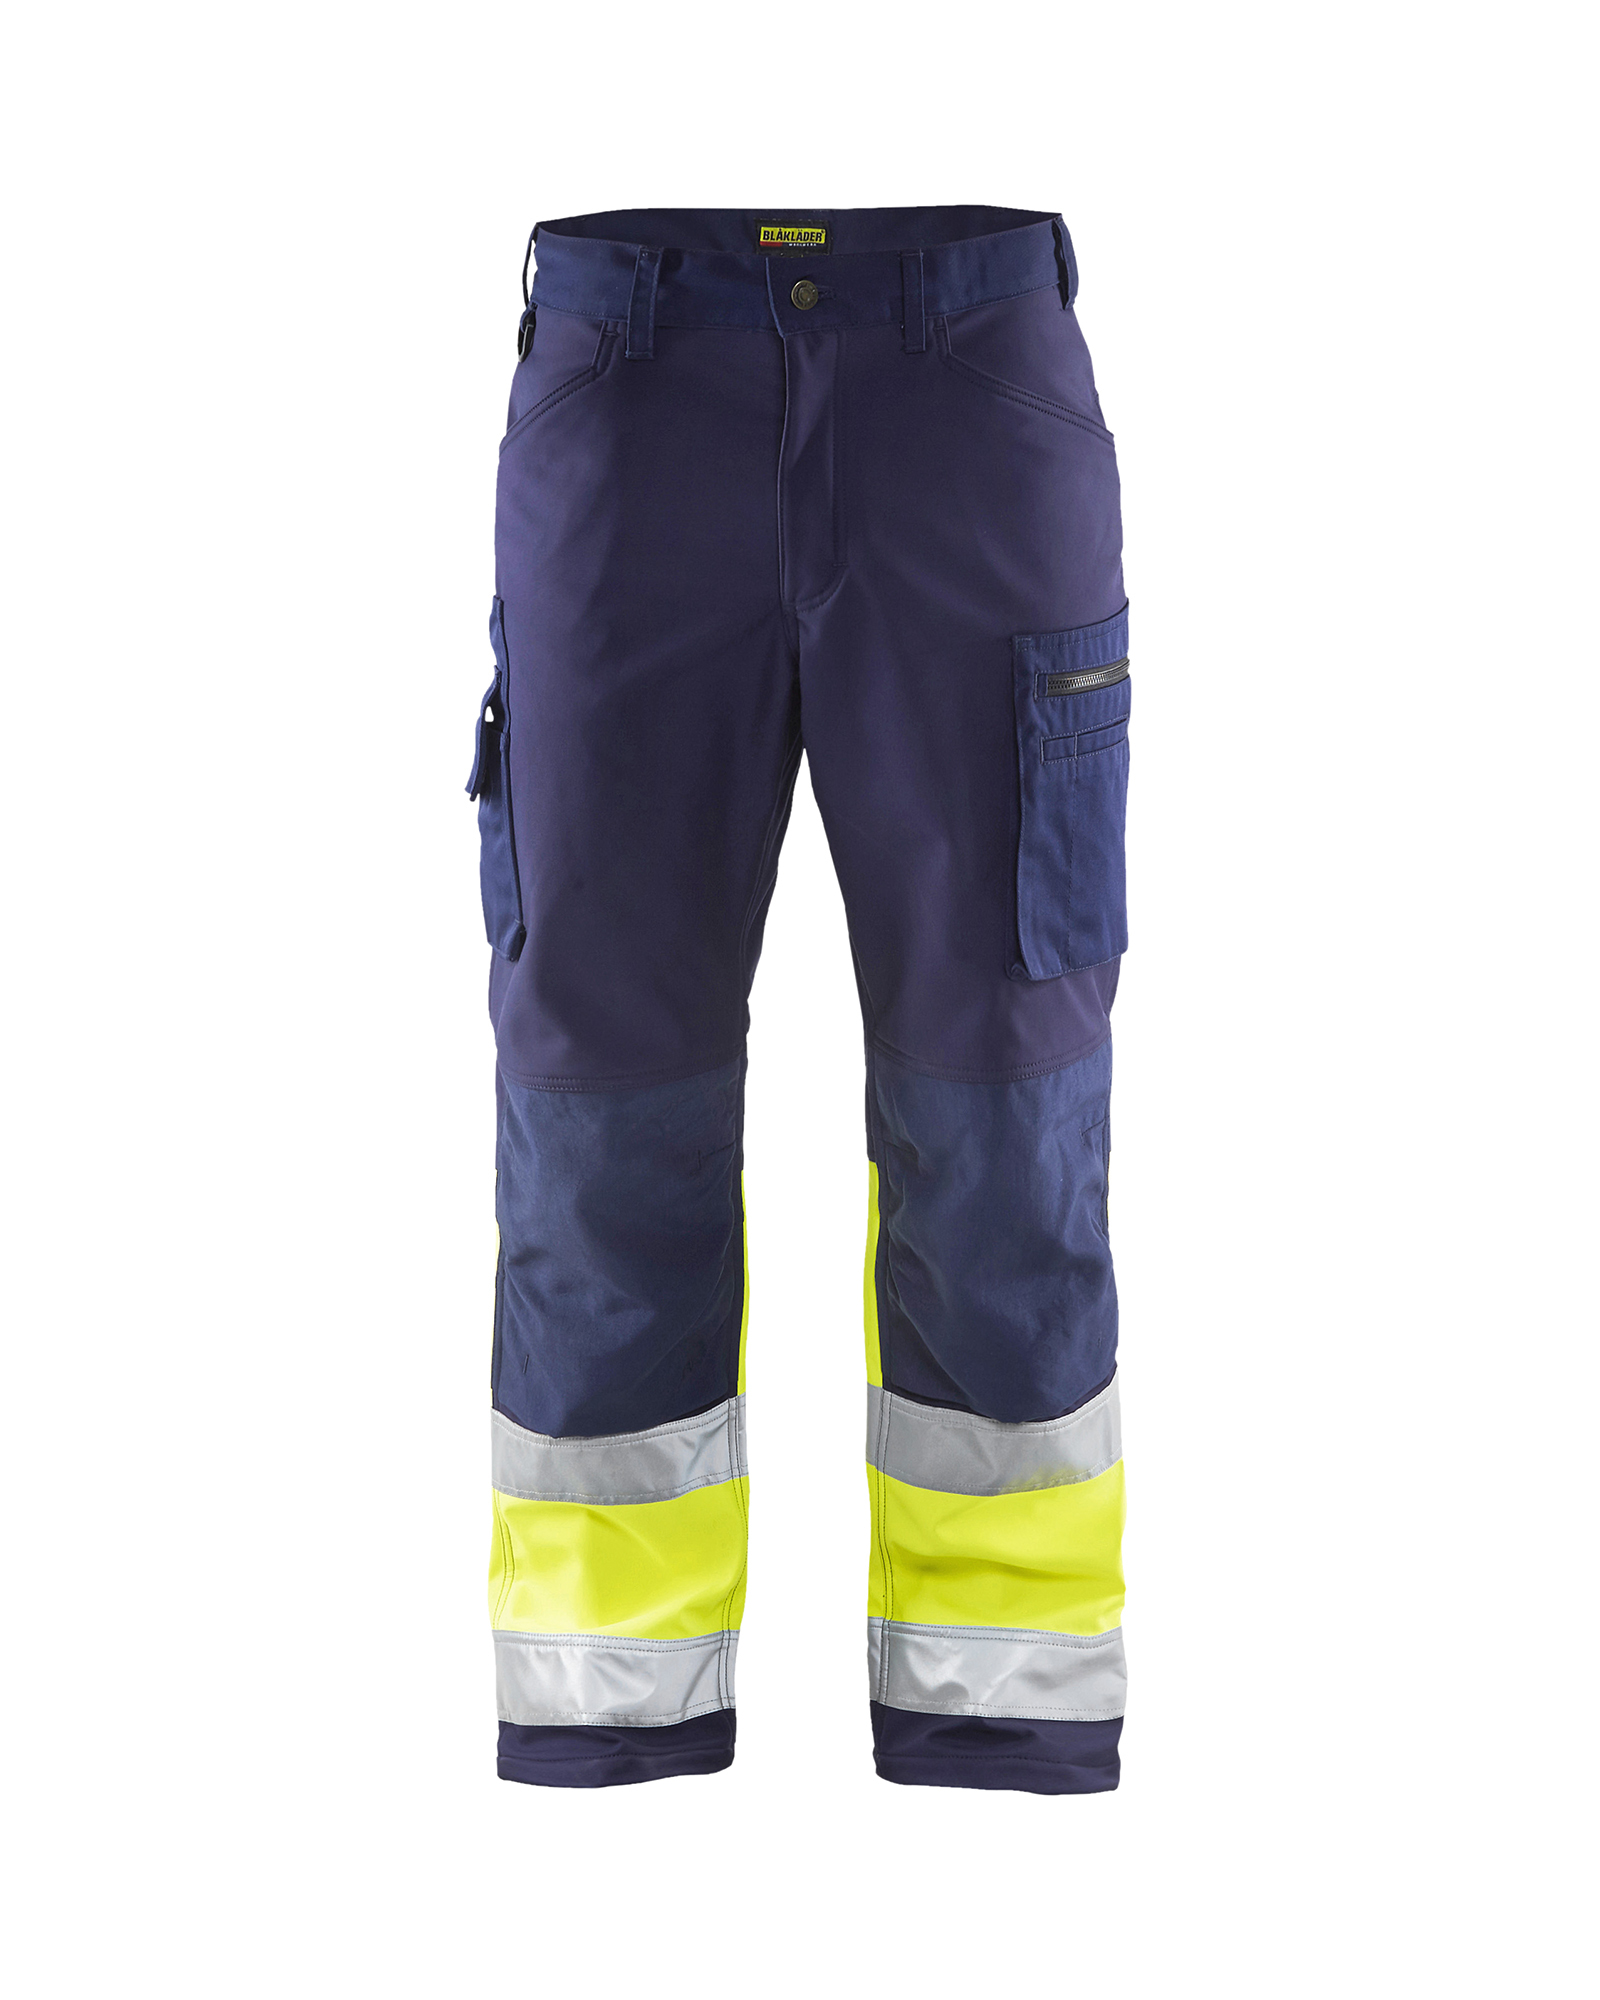 Pantalon softshell haute-visibilité Blåkläder 1562 Marine/Jaune fluo Blaklader - 156225178933C